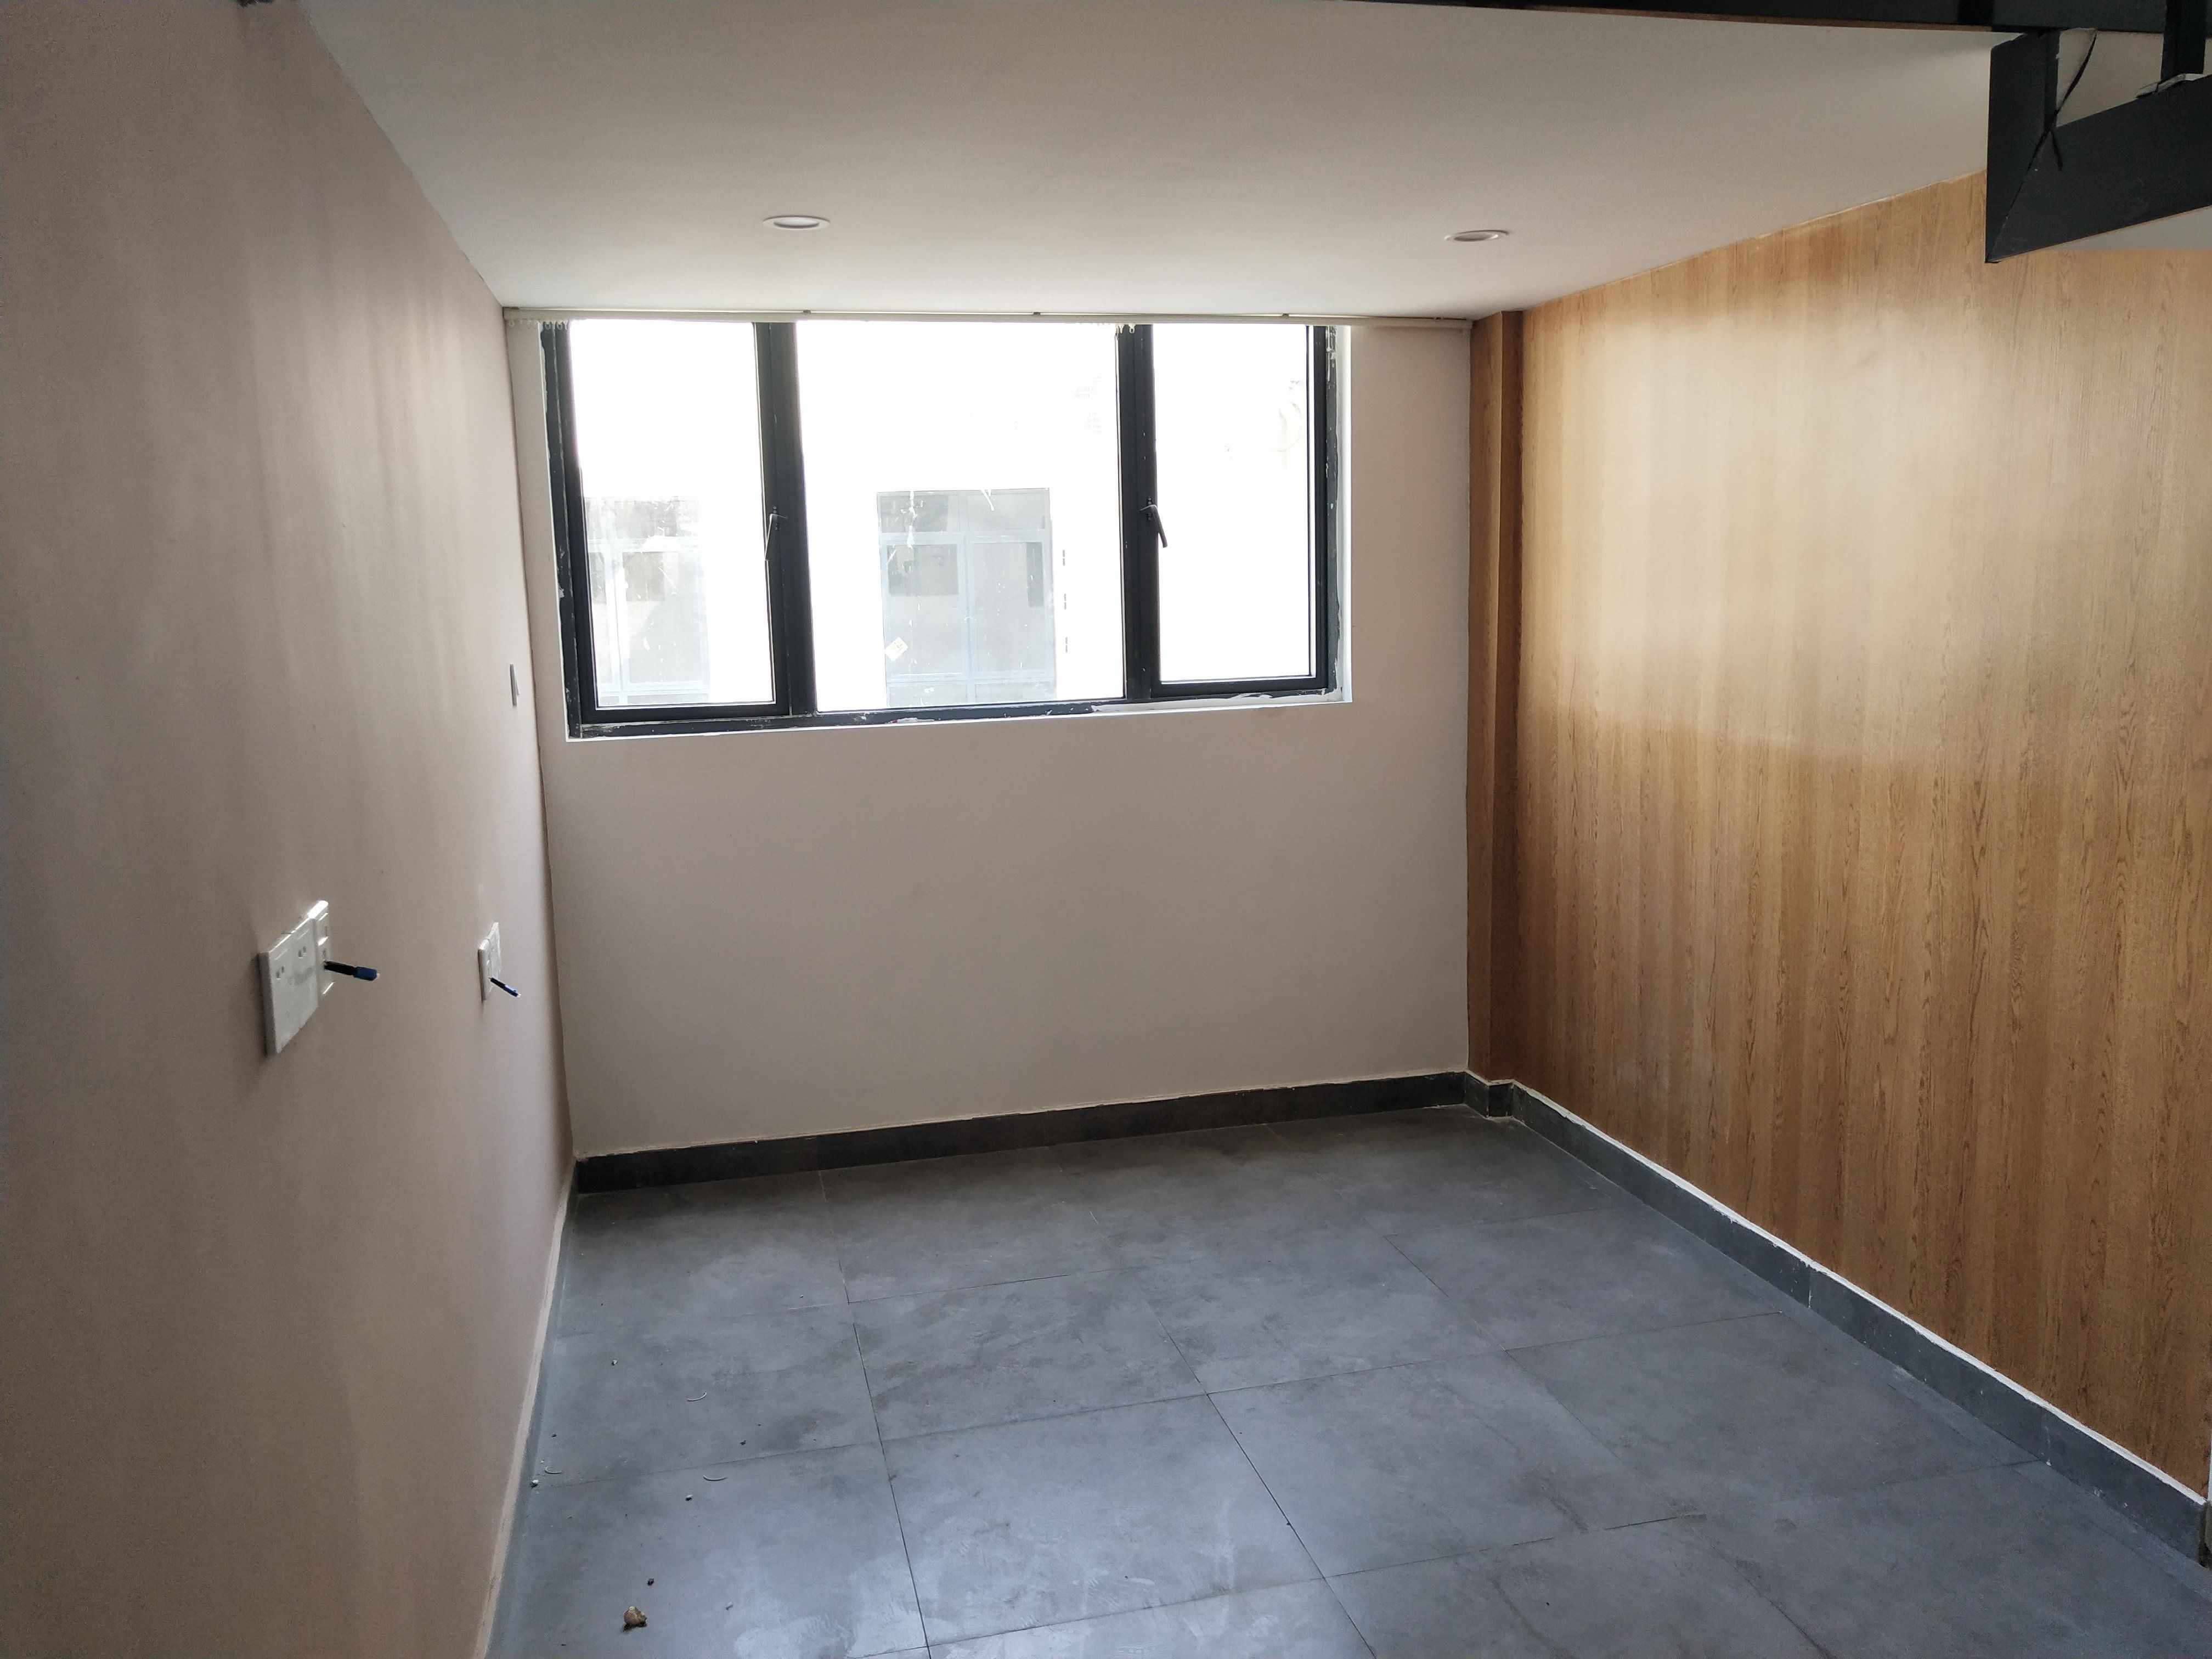 Young space漾创意空间44平米办公室出租-租金价格3.03元/m²/天